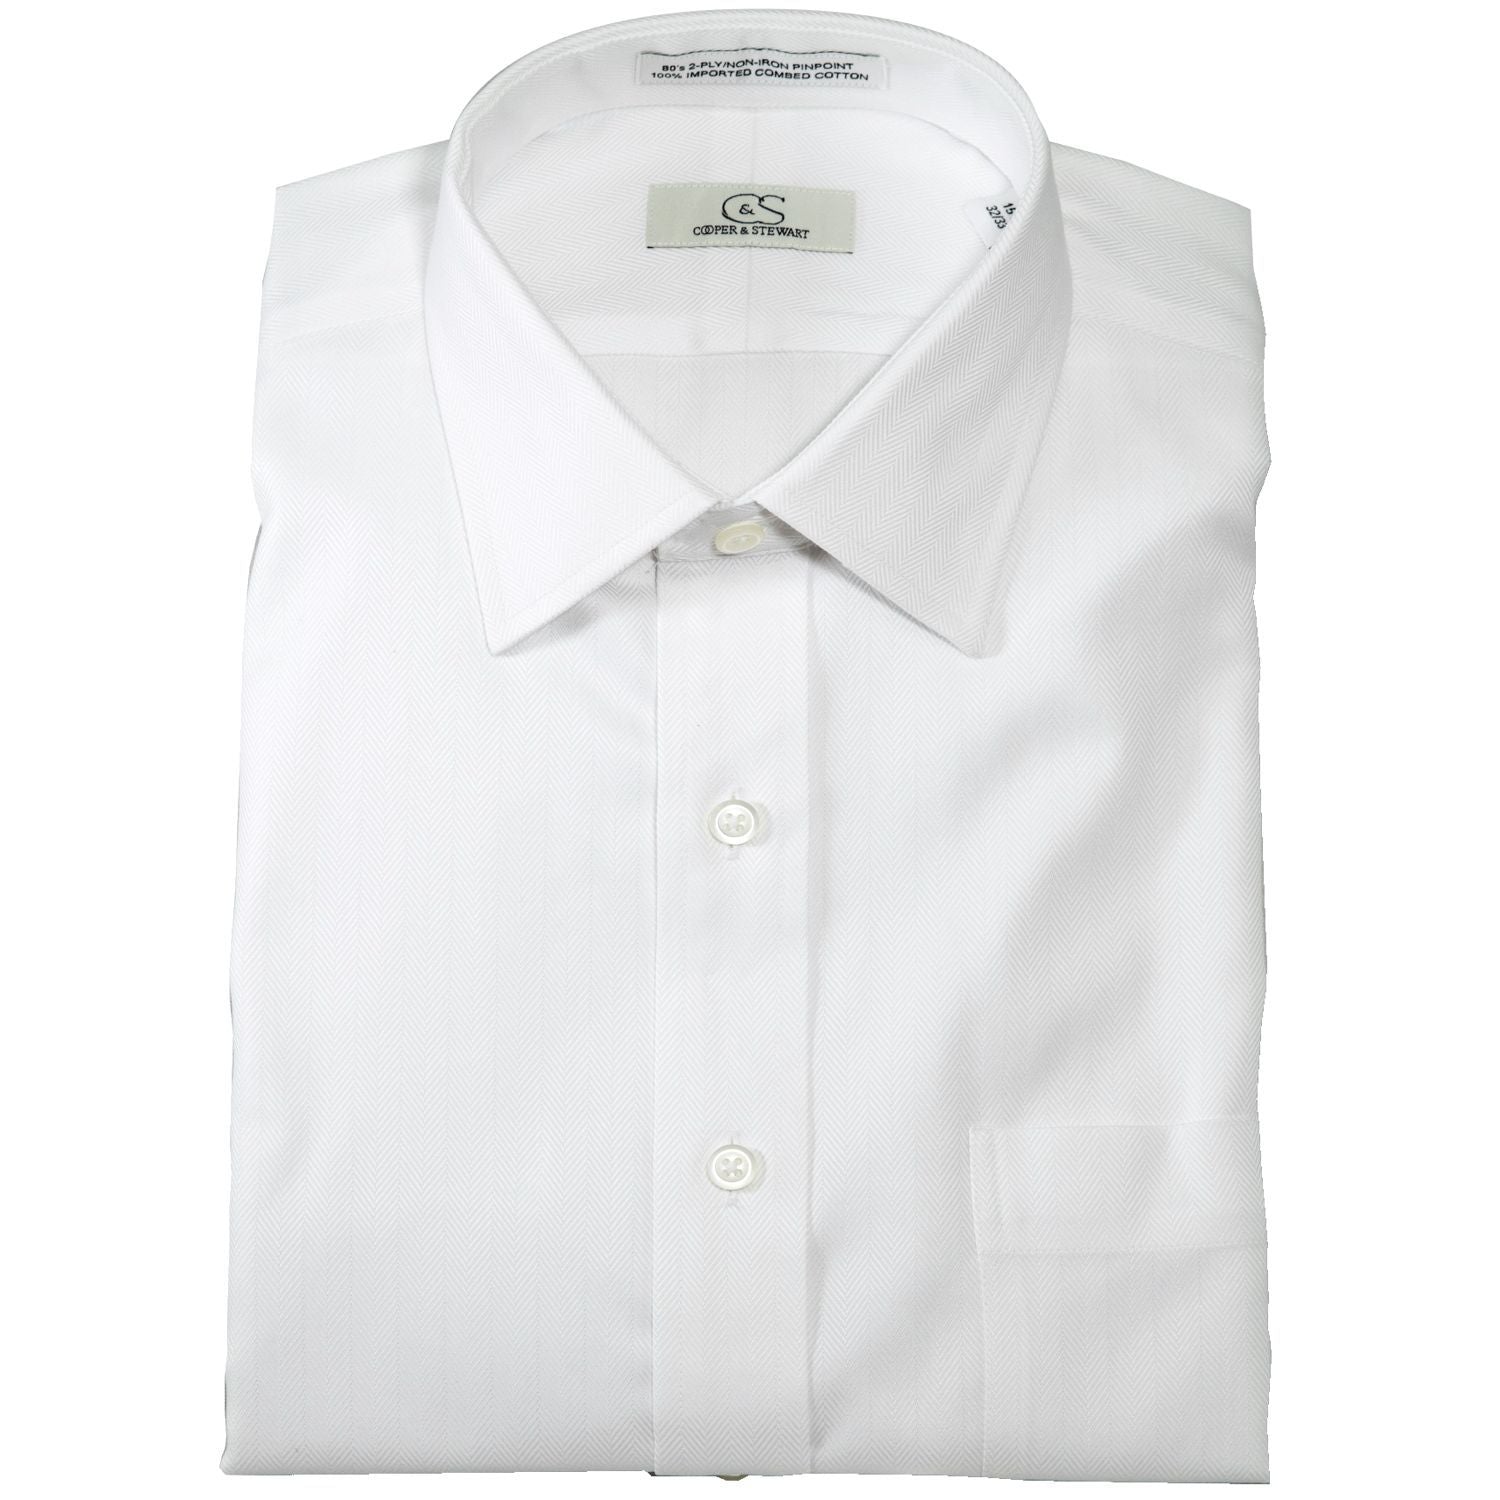 The Charleston - Wrinkle-Free Herringbone Cotton Dress Shirt in White (Size 15 1/2 - 34/35) by Cooper & Stewart